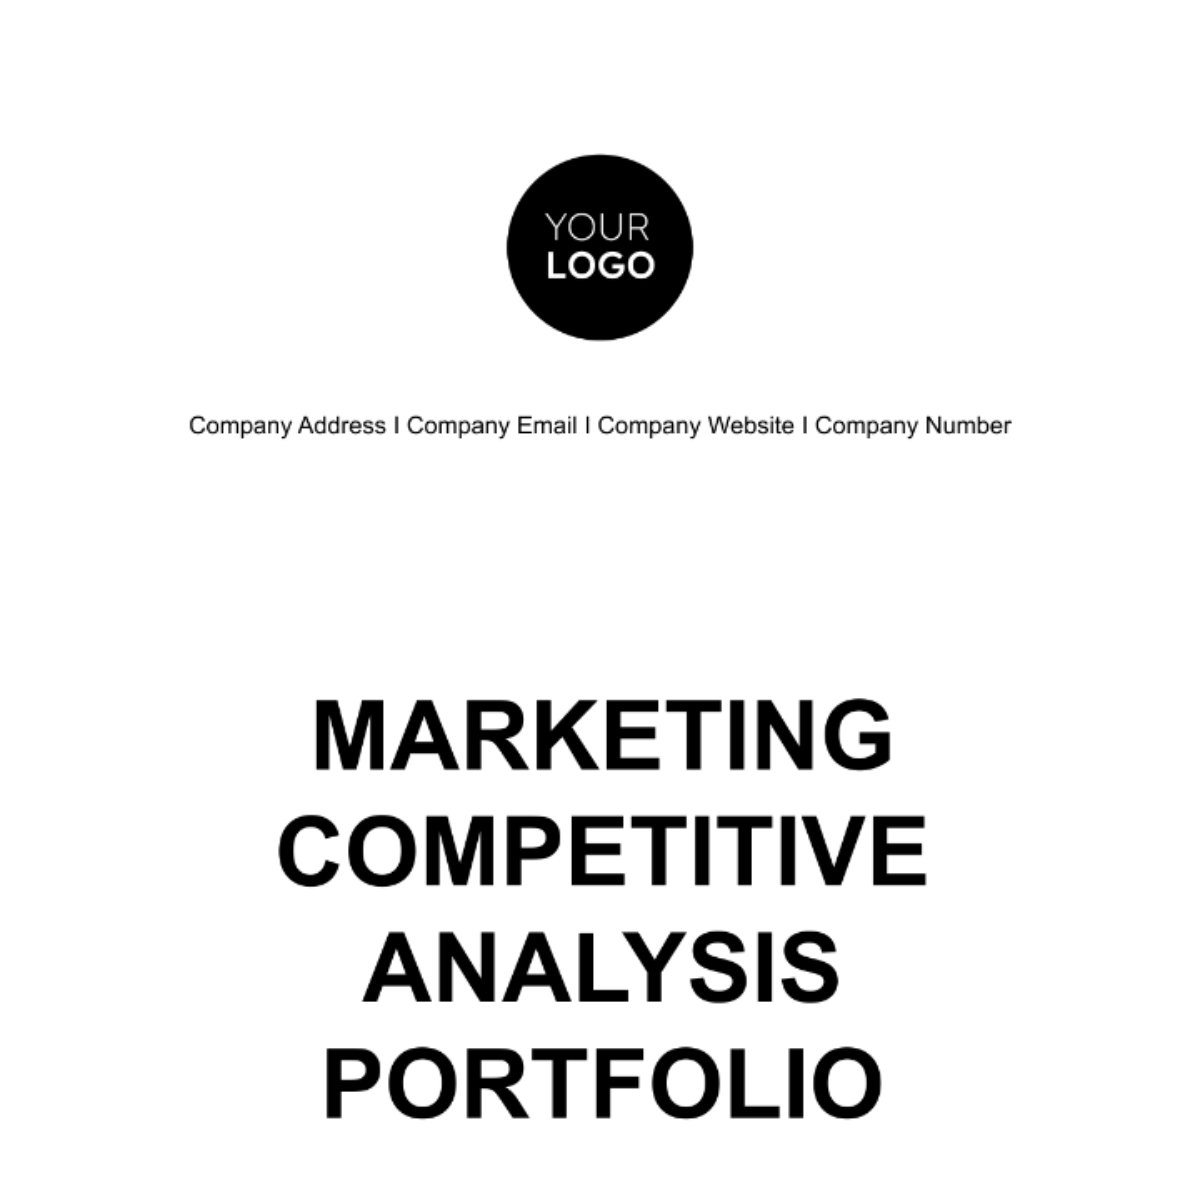 Marketing Competitive Analysis Portfolio Template